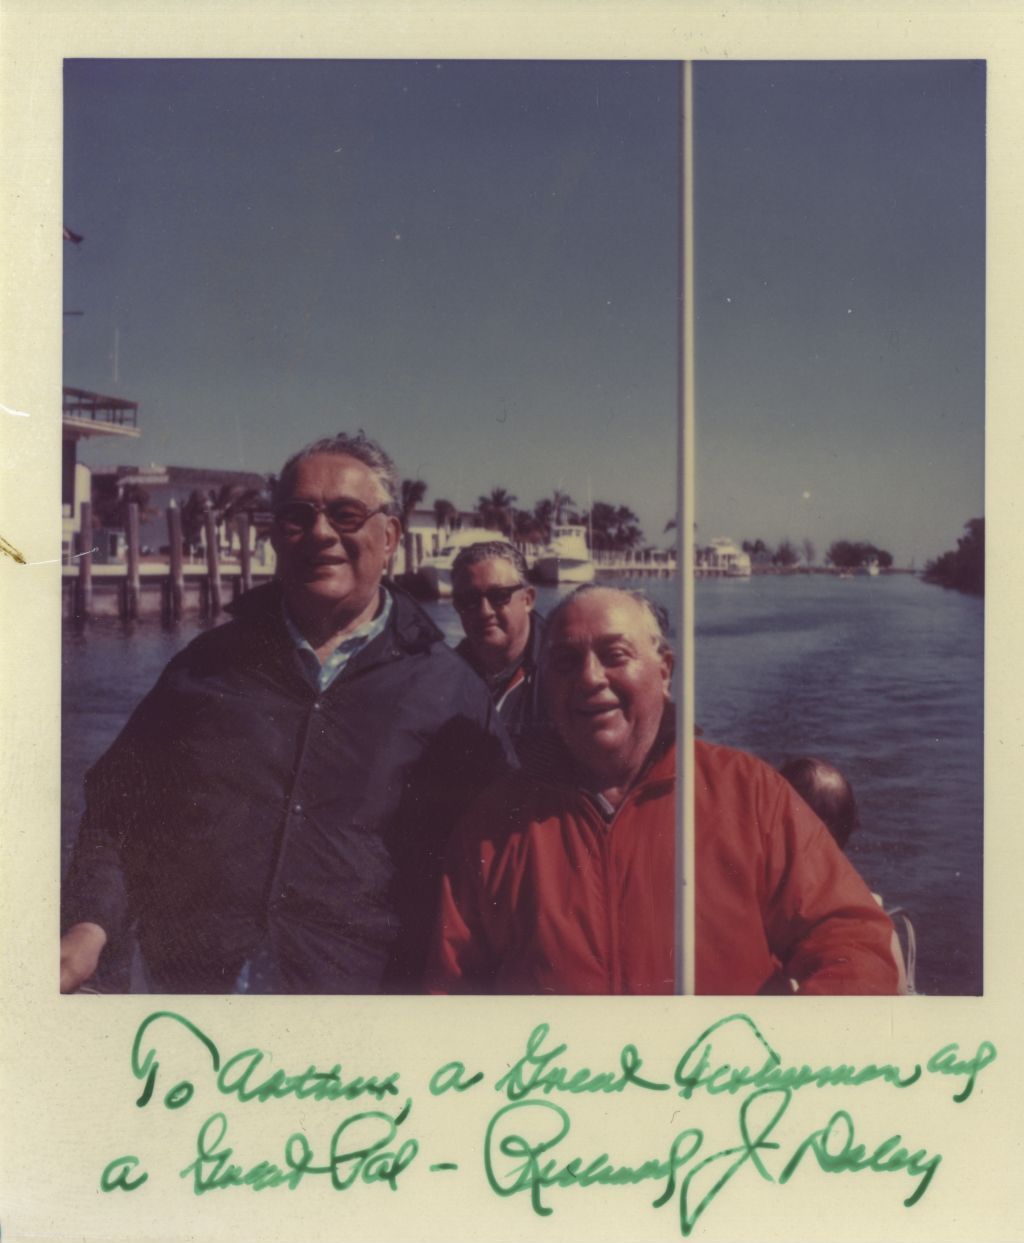 Richard J. Daley with Arthur Wirtz on a fishing trip